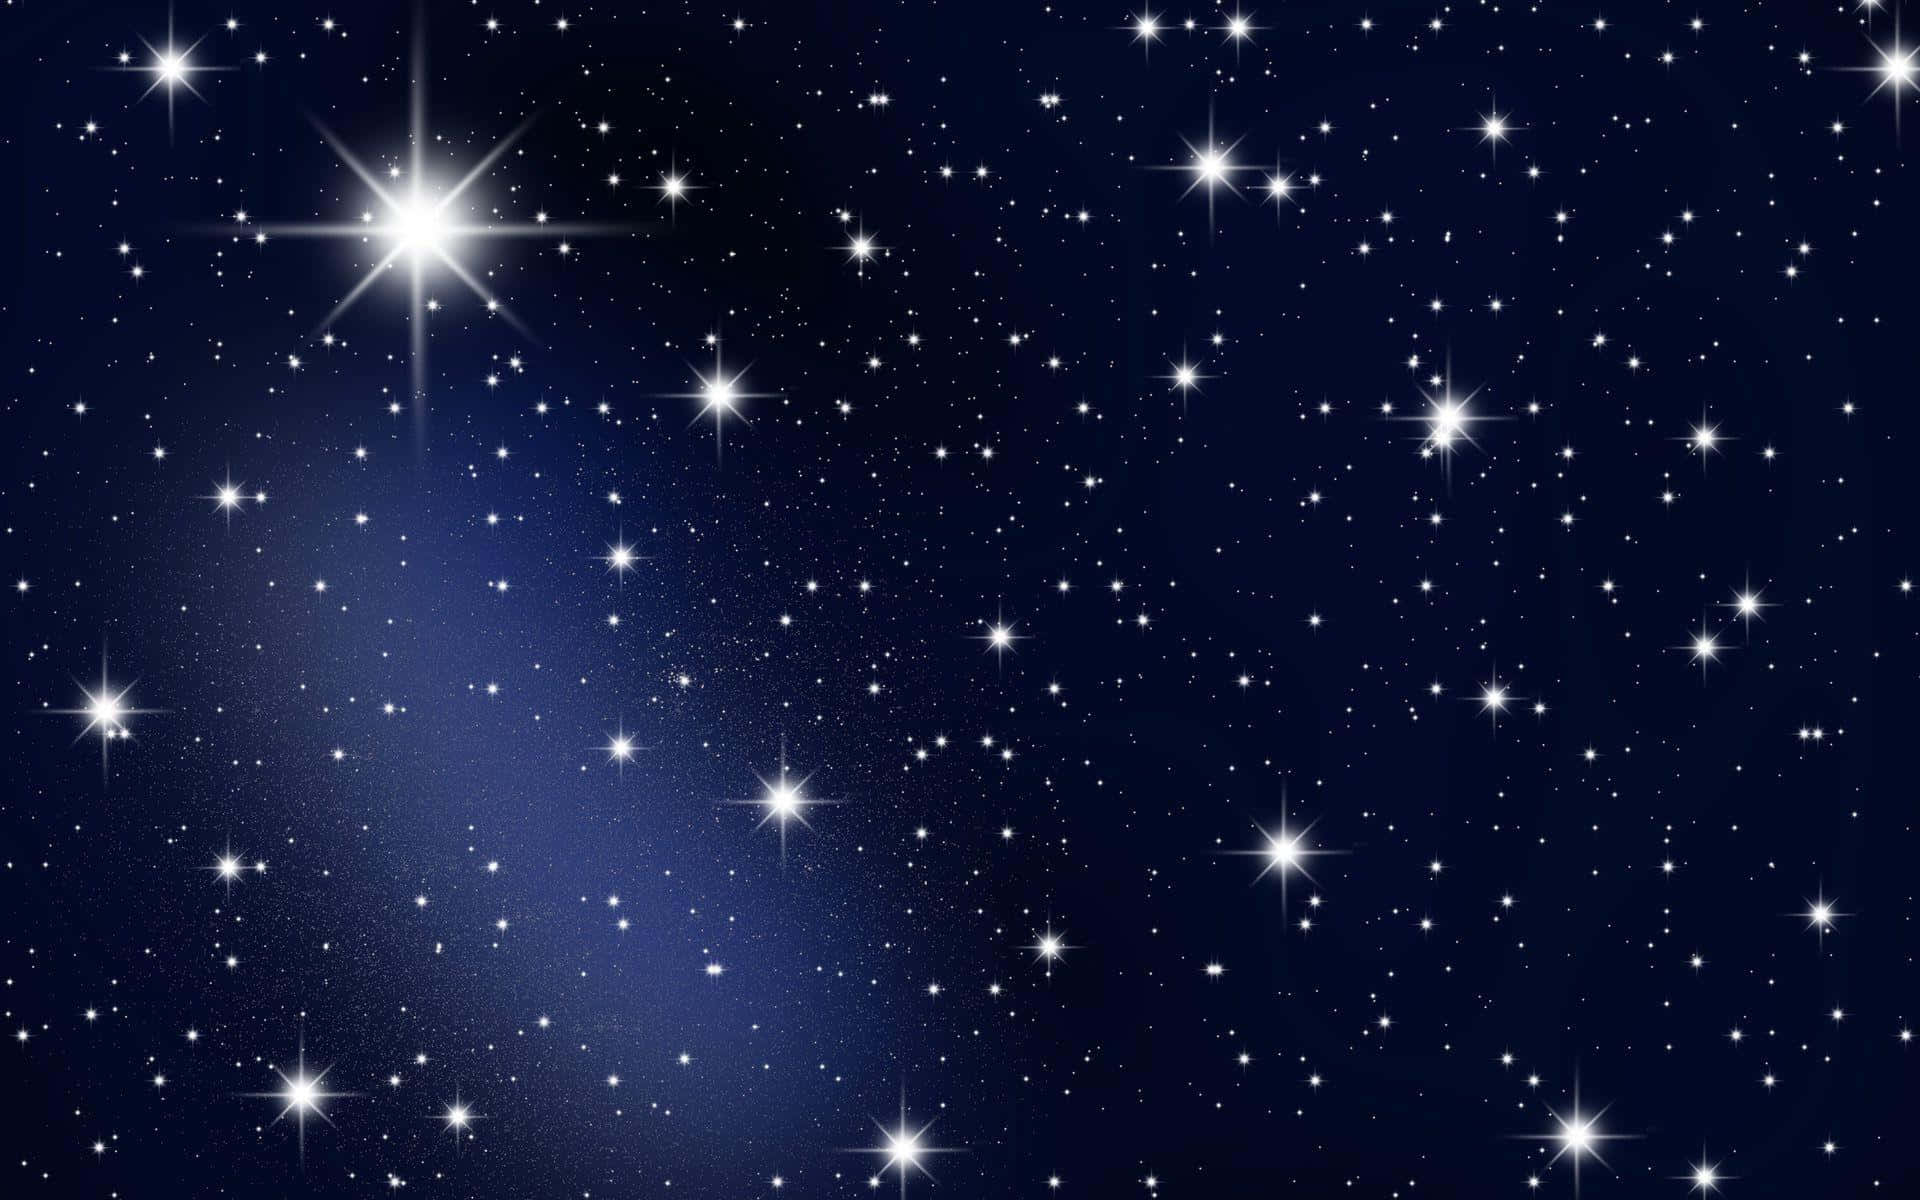 Star-Filled Night Sky